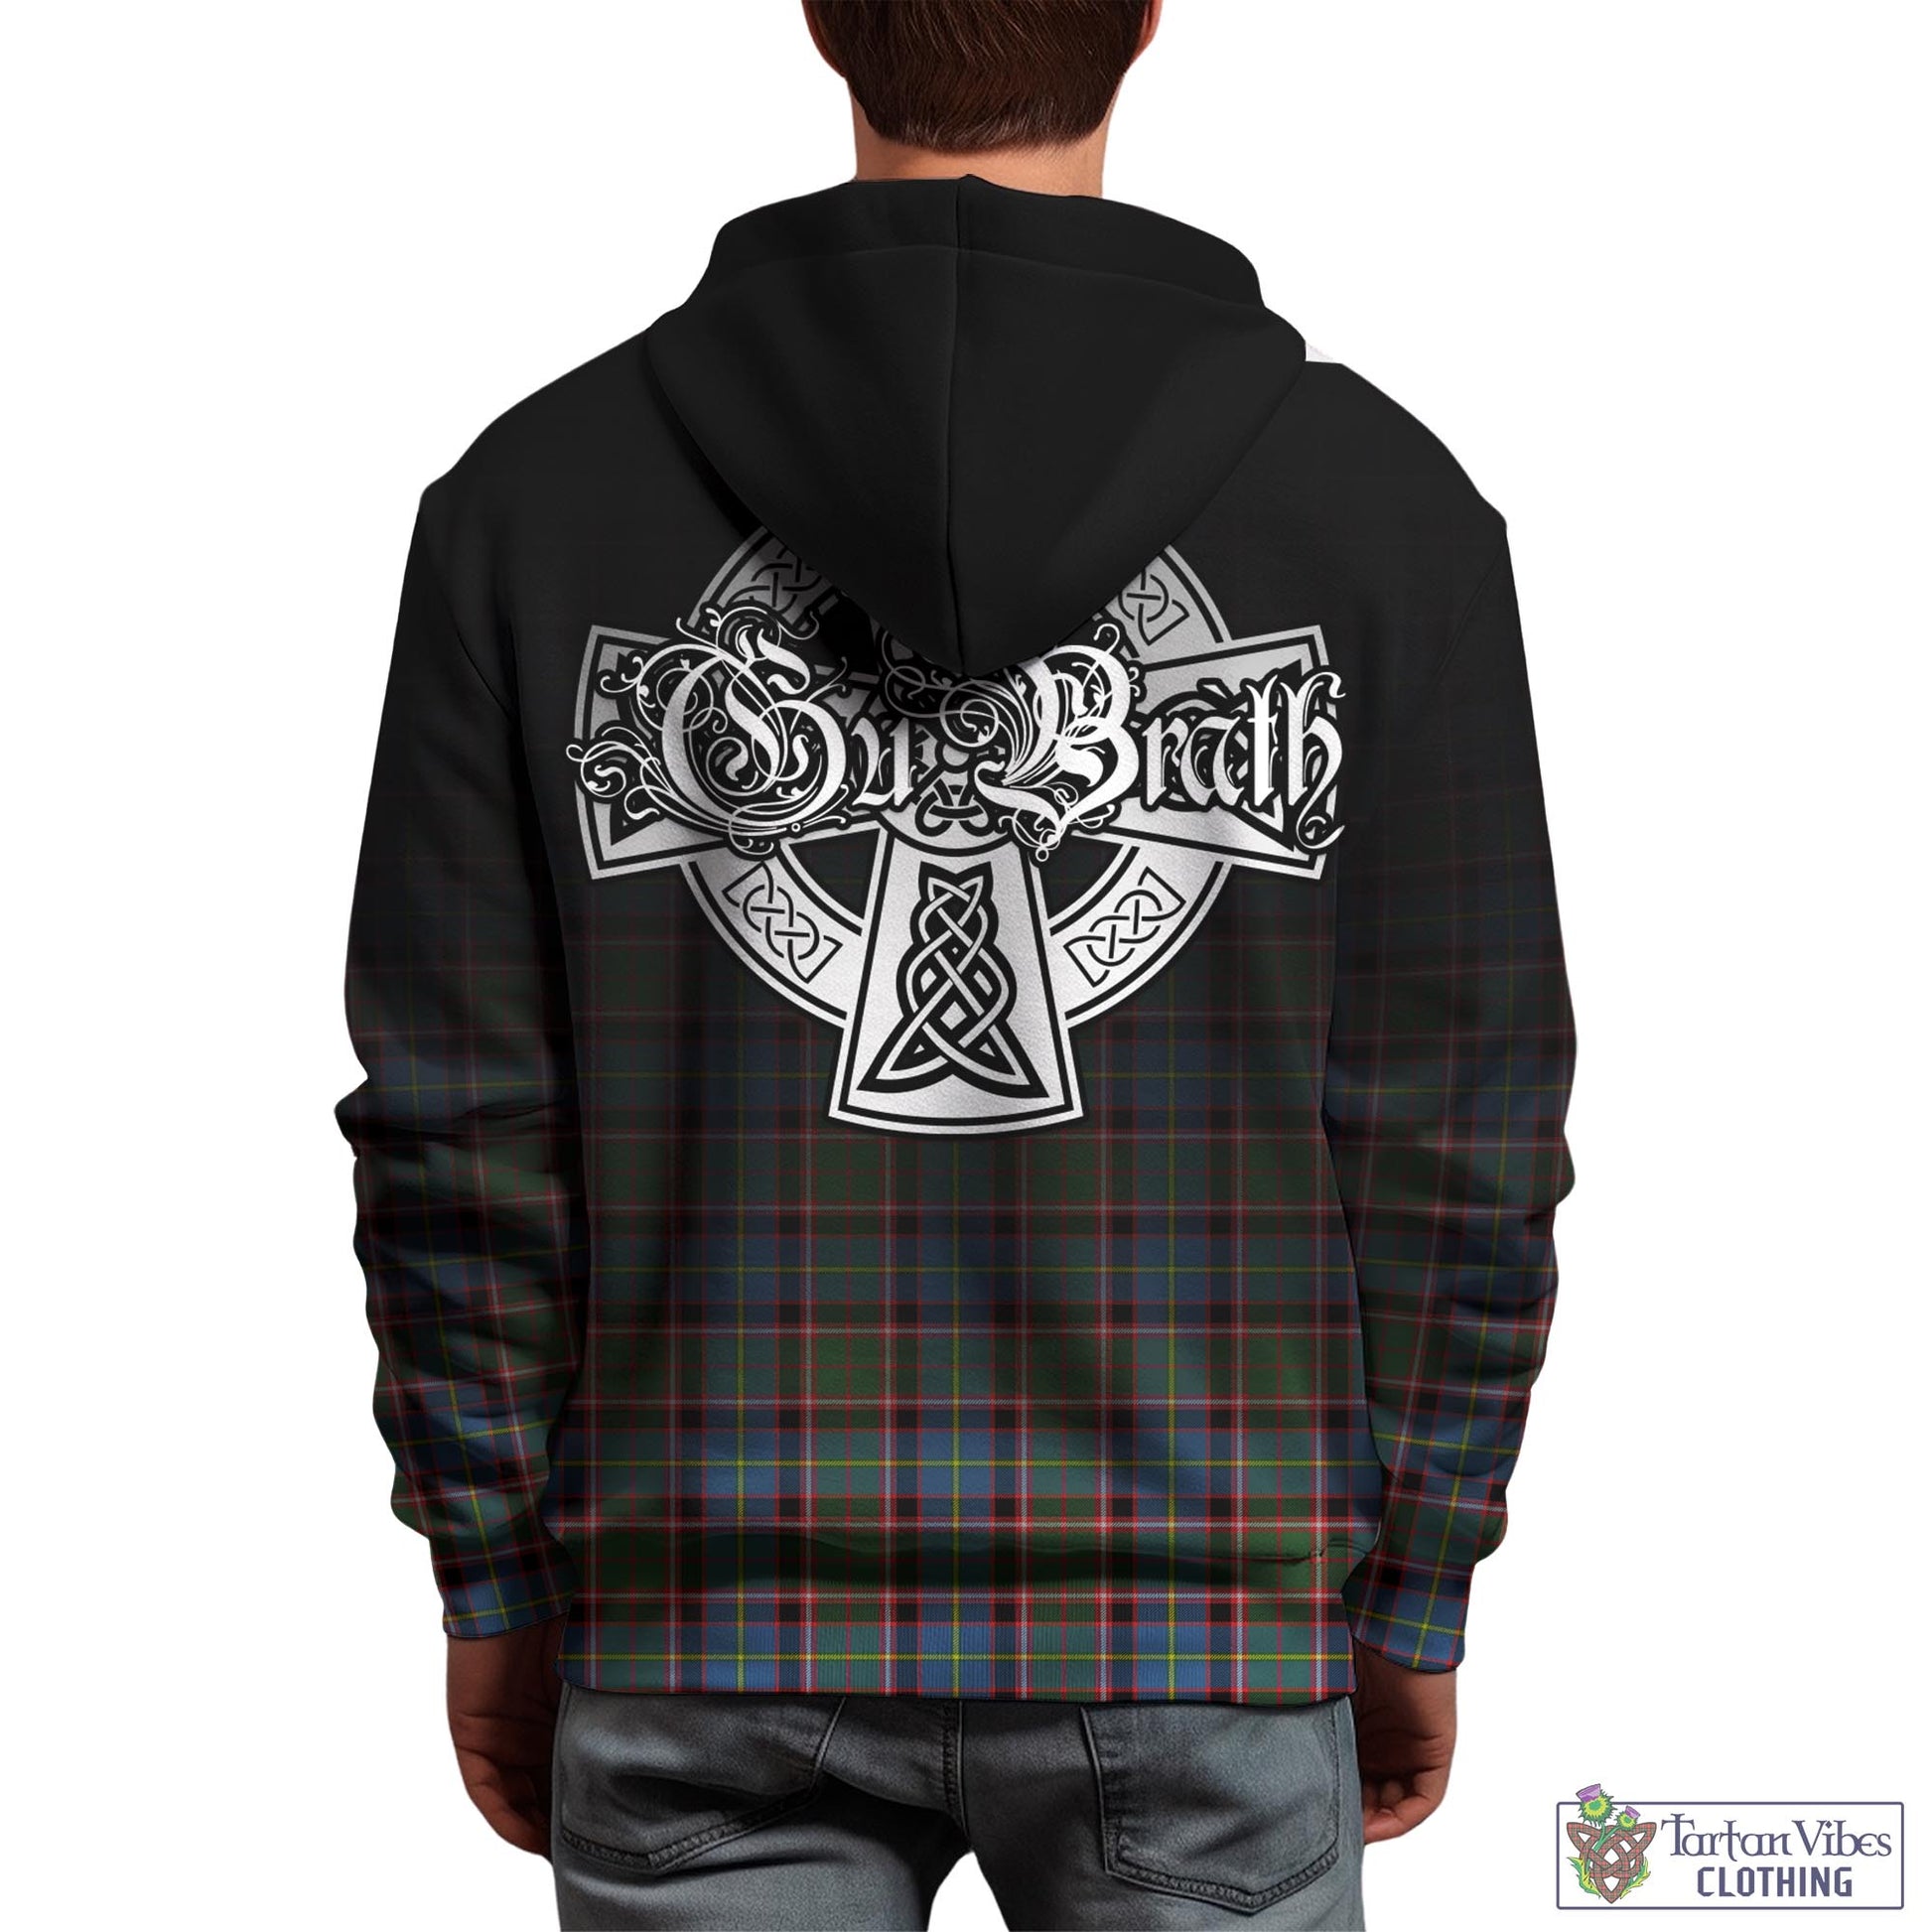 Tartan Vibes Clothing Aikenhead Tartan Hoodie Featuring Alba Gu Brath Family Crest Celtic Inspired